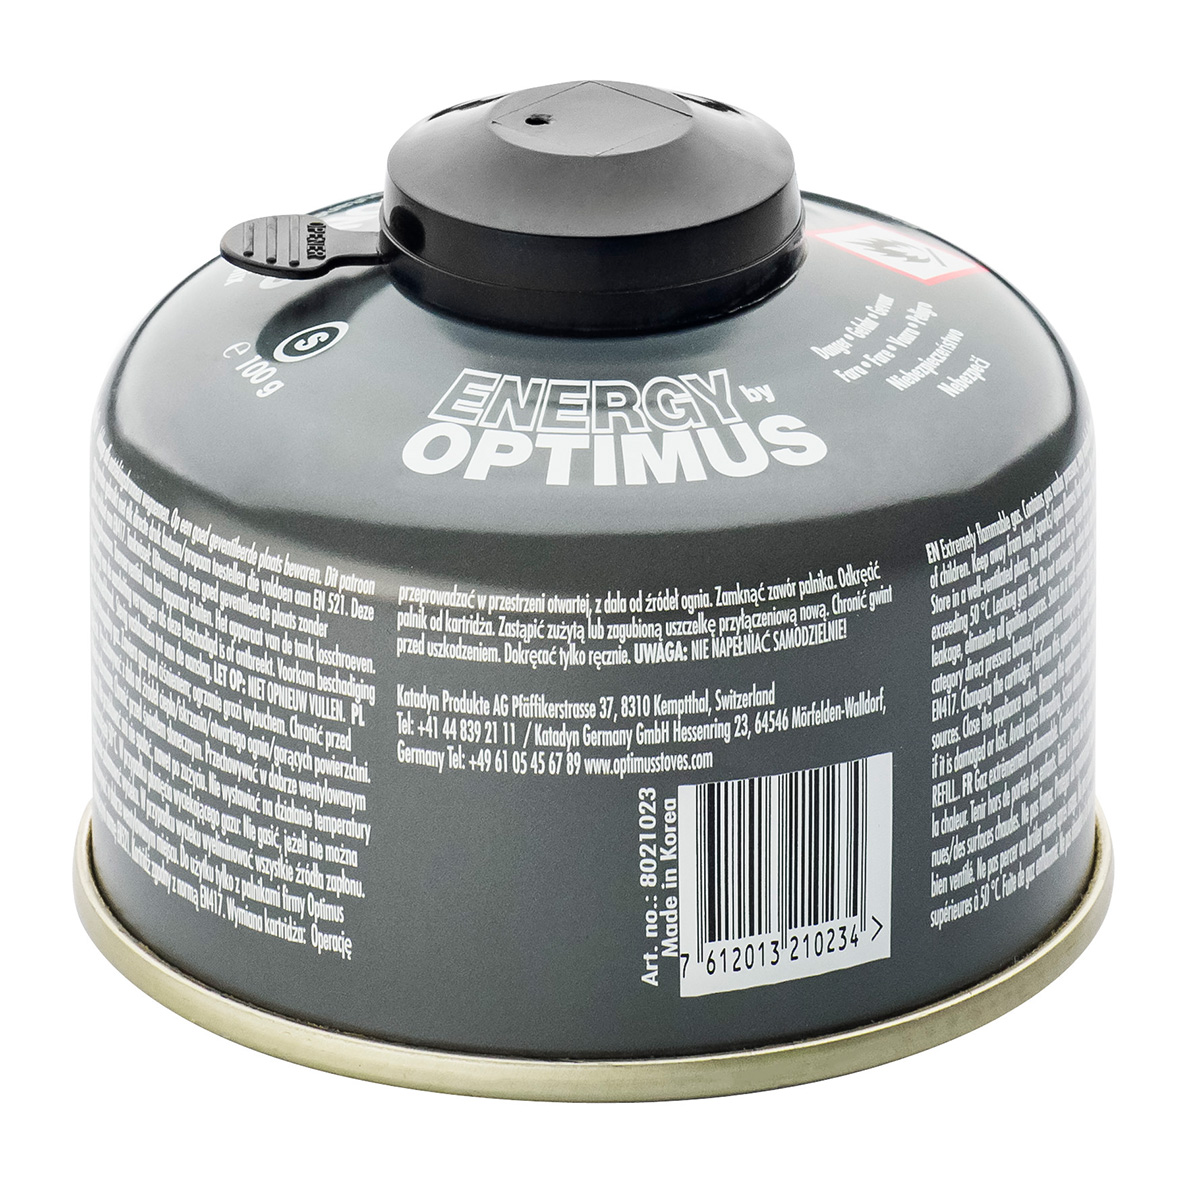 Optimus Gas 4-Season, 100 g